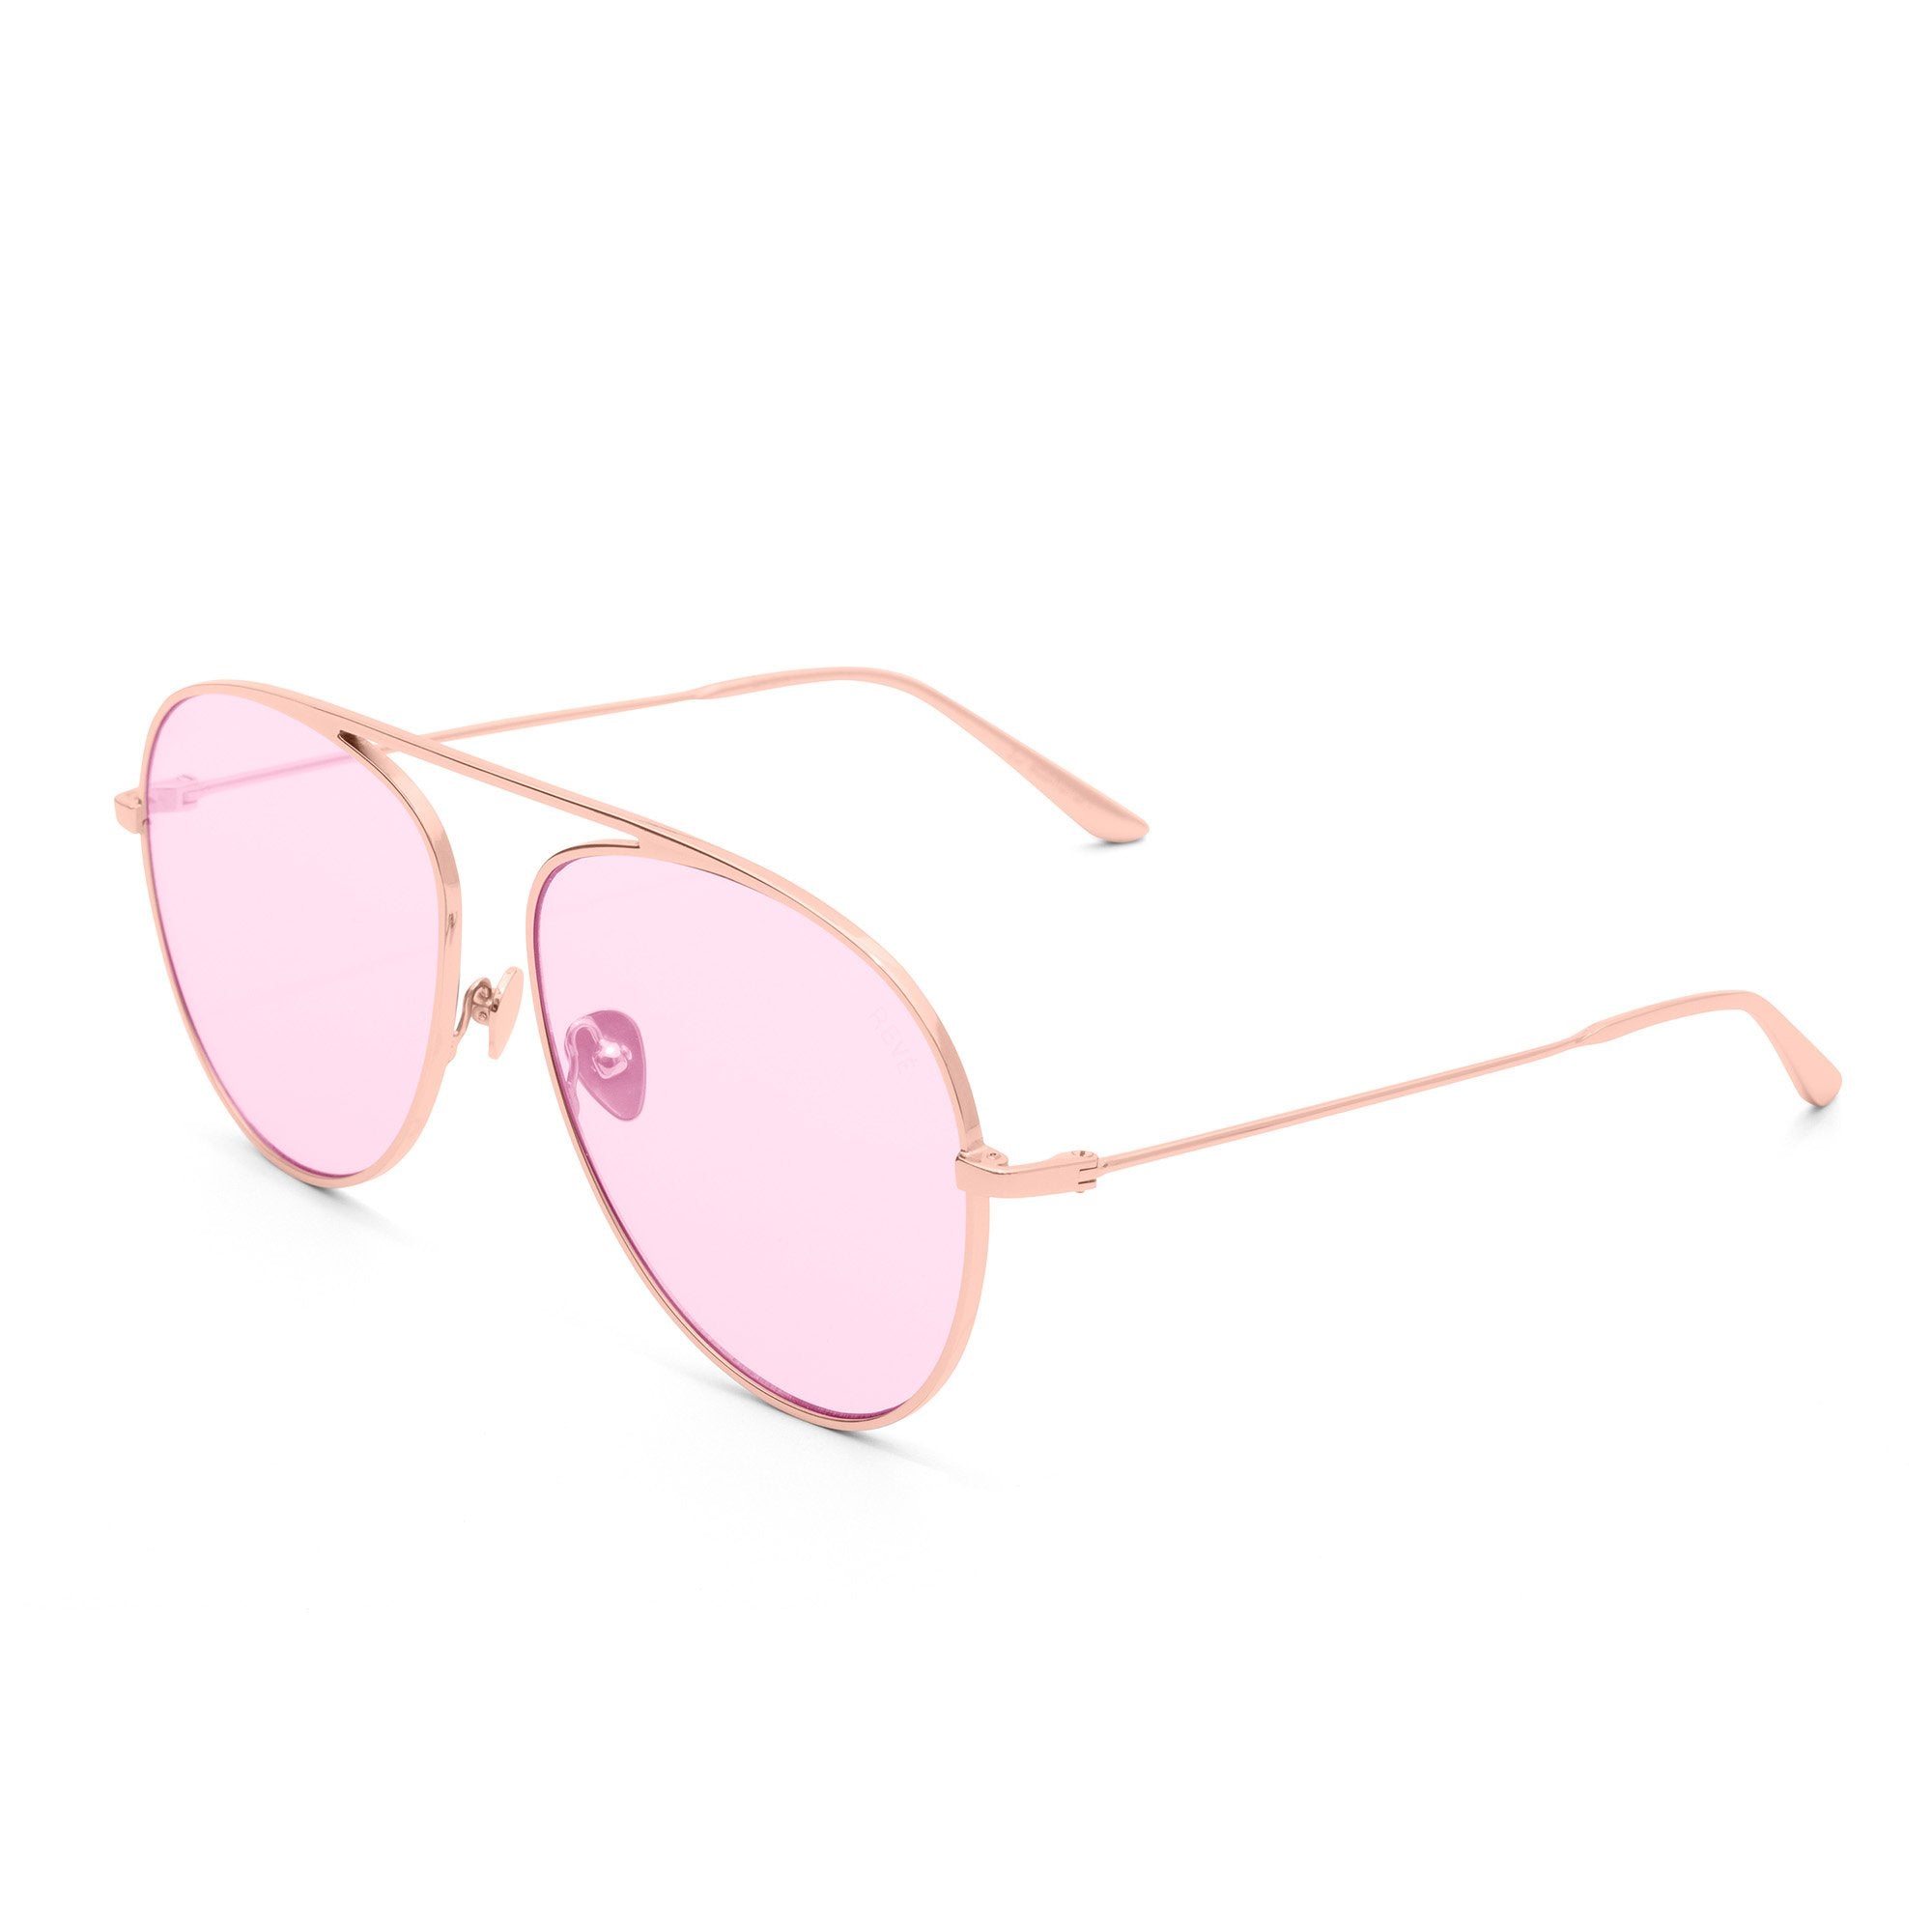 REVE by RENE jellybean sunglasses in pink